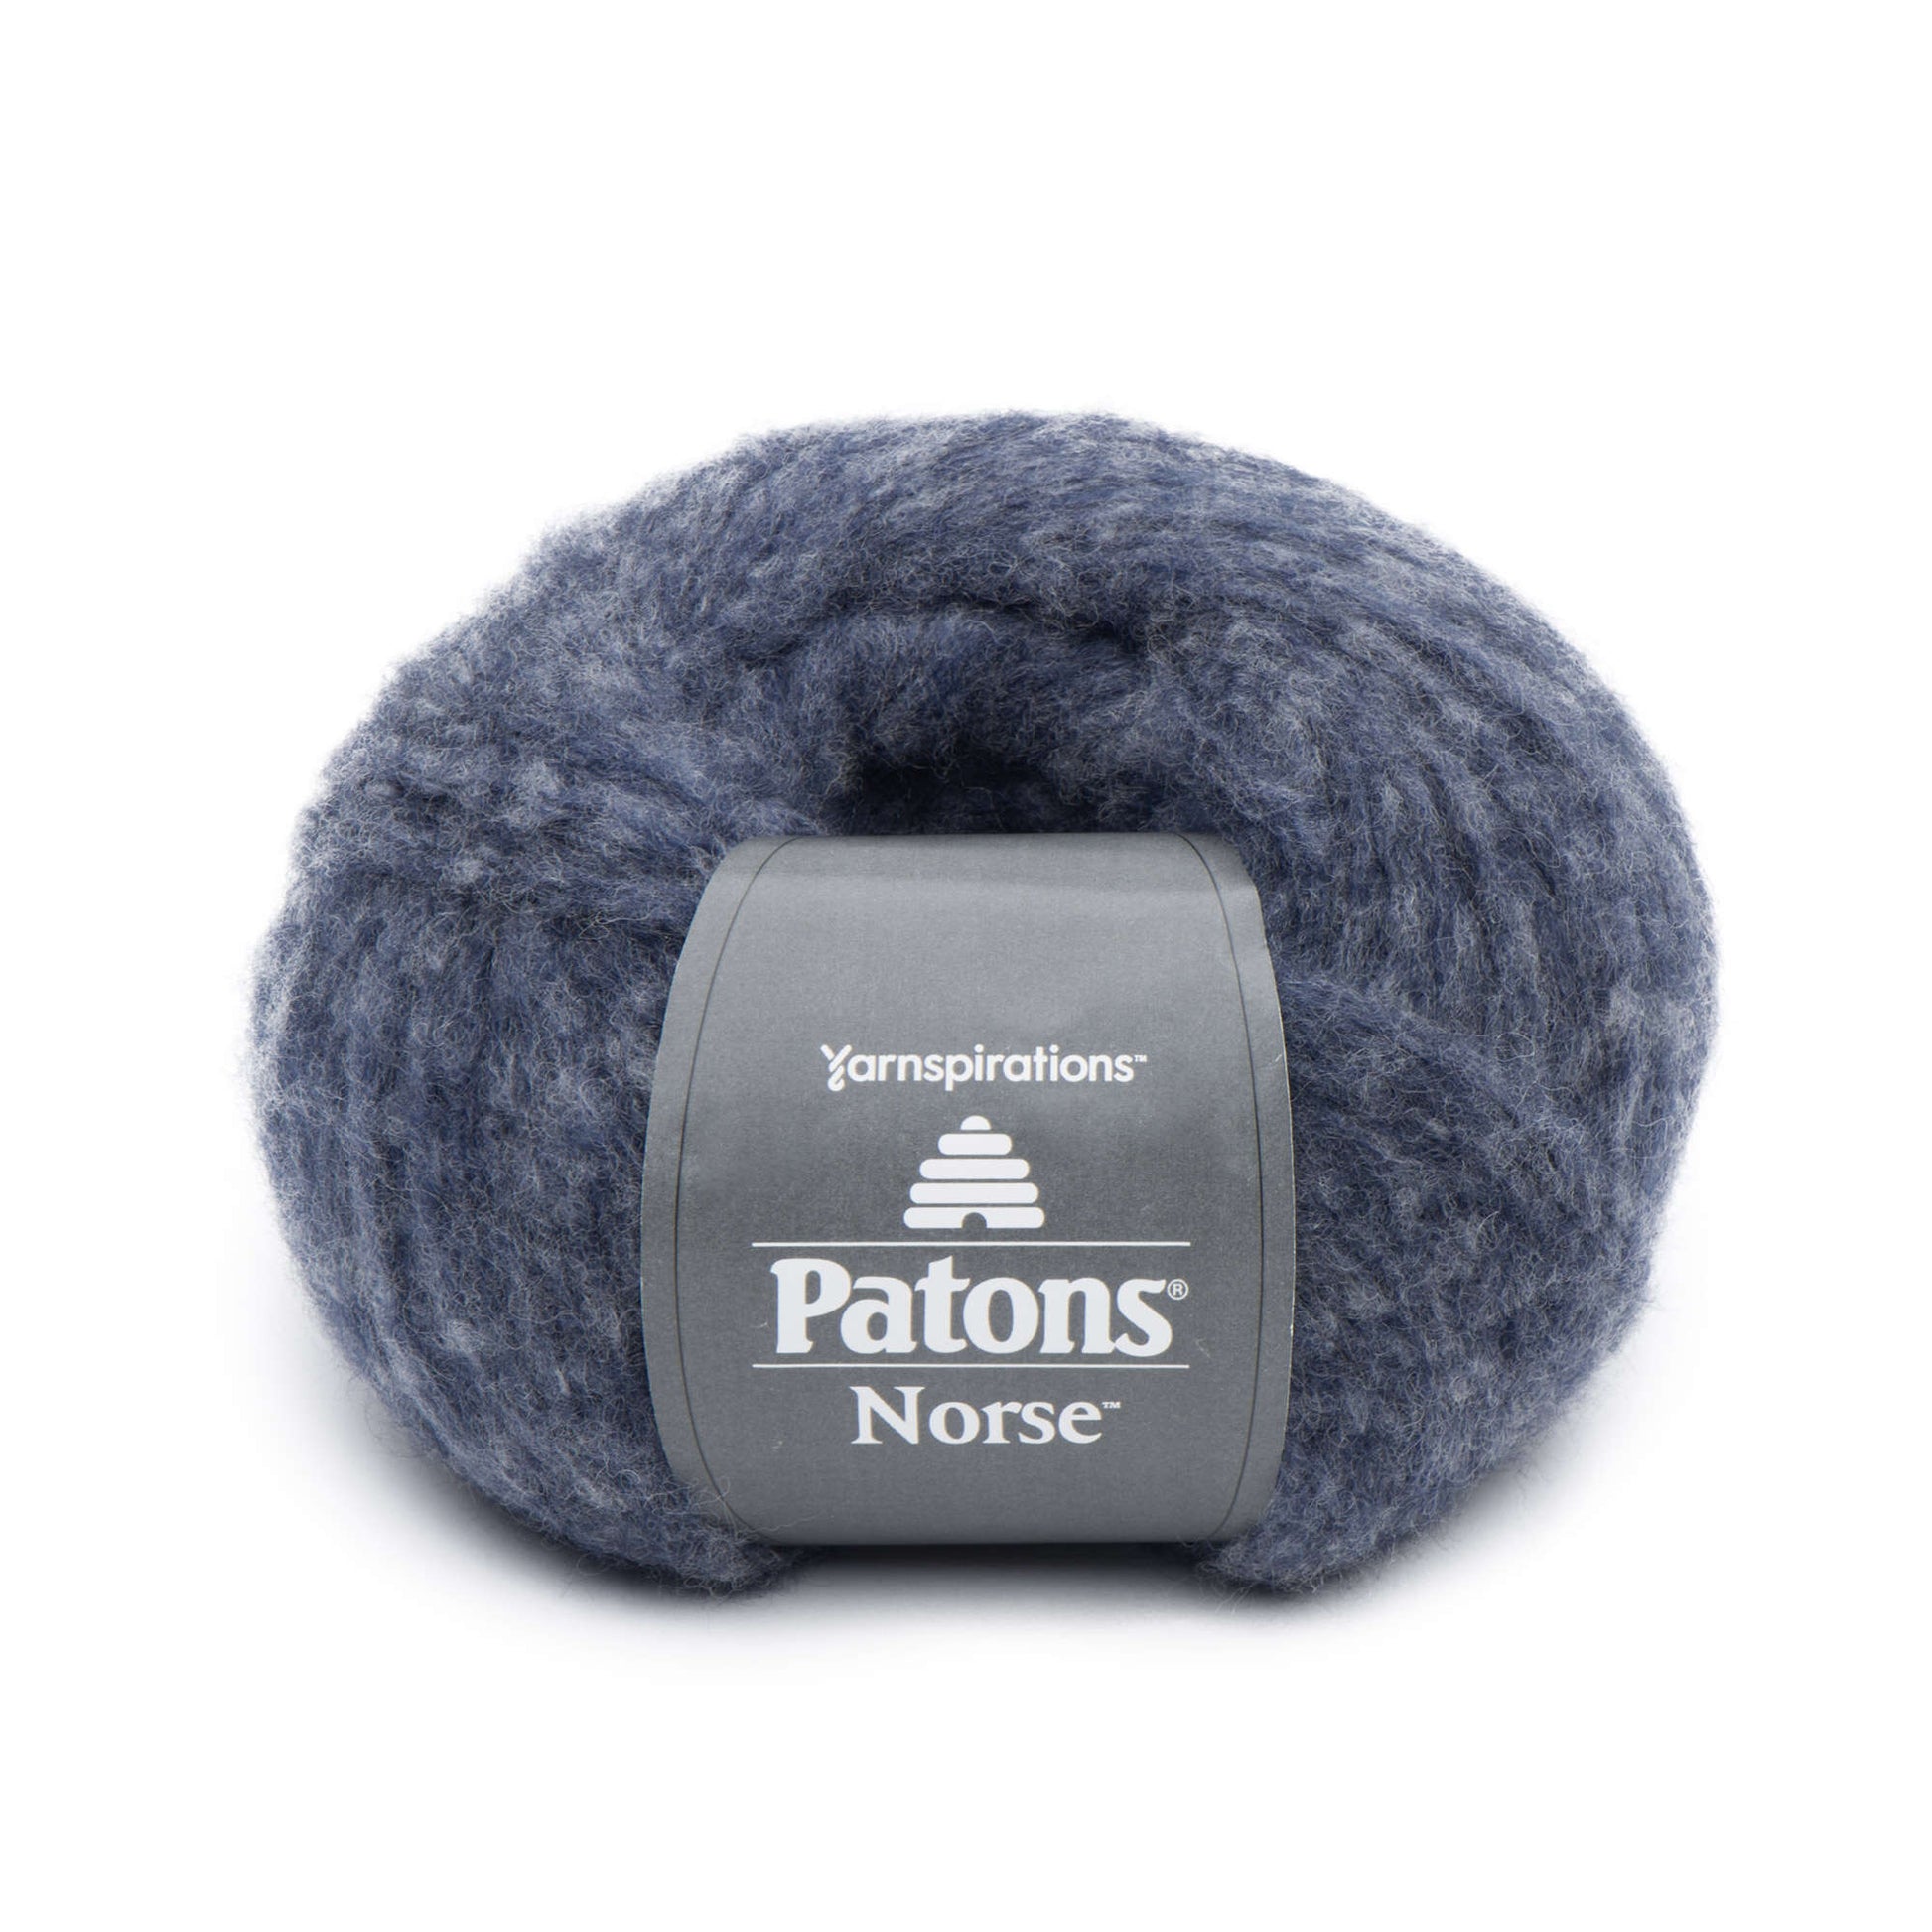 Patons Norse Yarn - Clearance shades Indigo